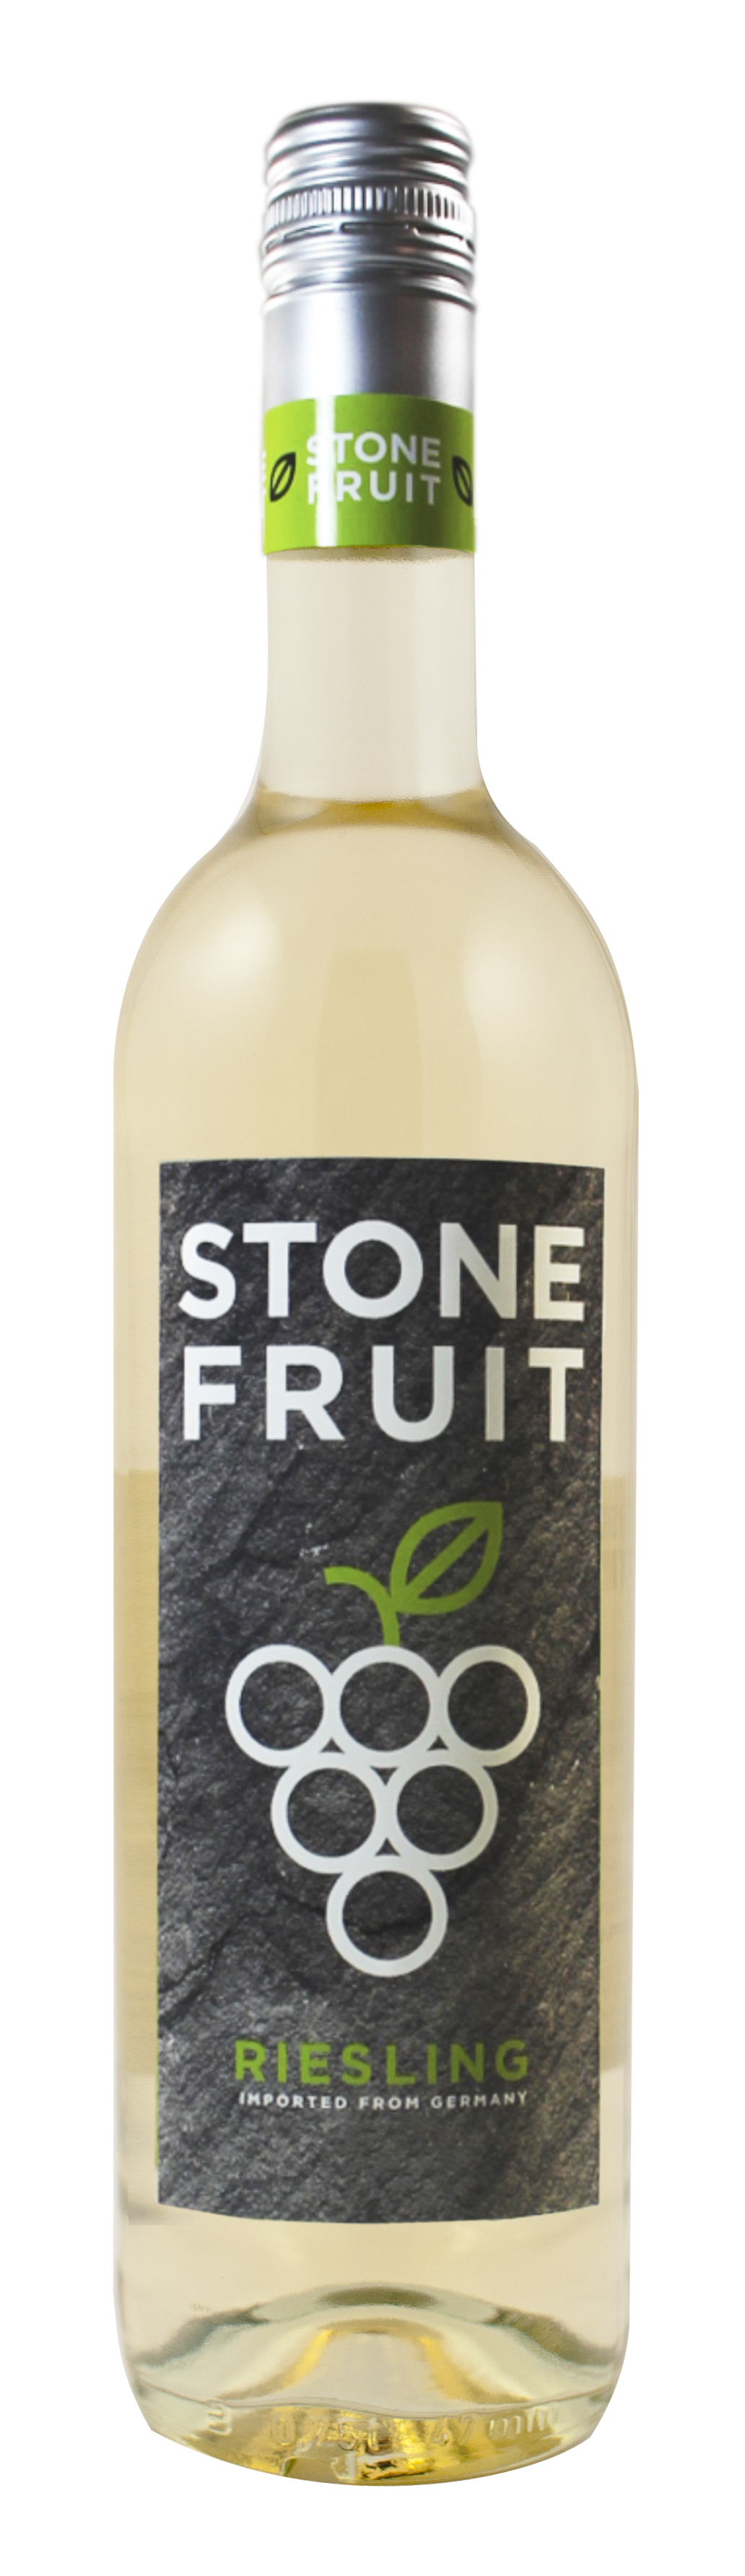 Stone Fruit Riesling Bottle Shot